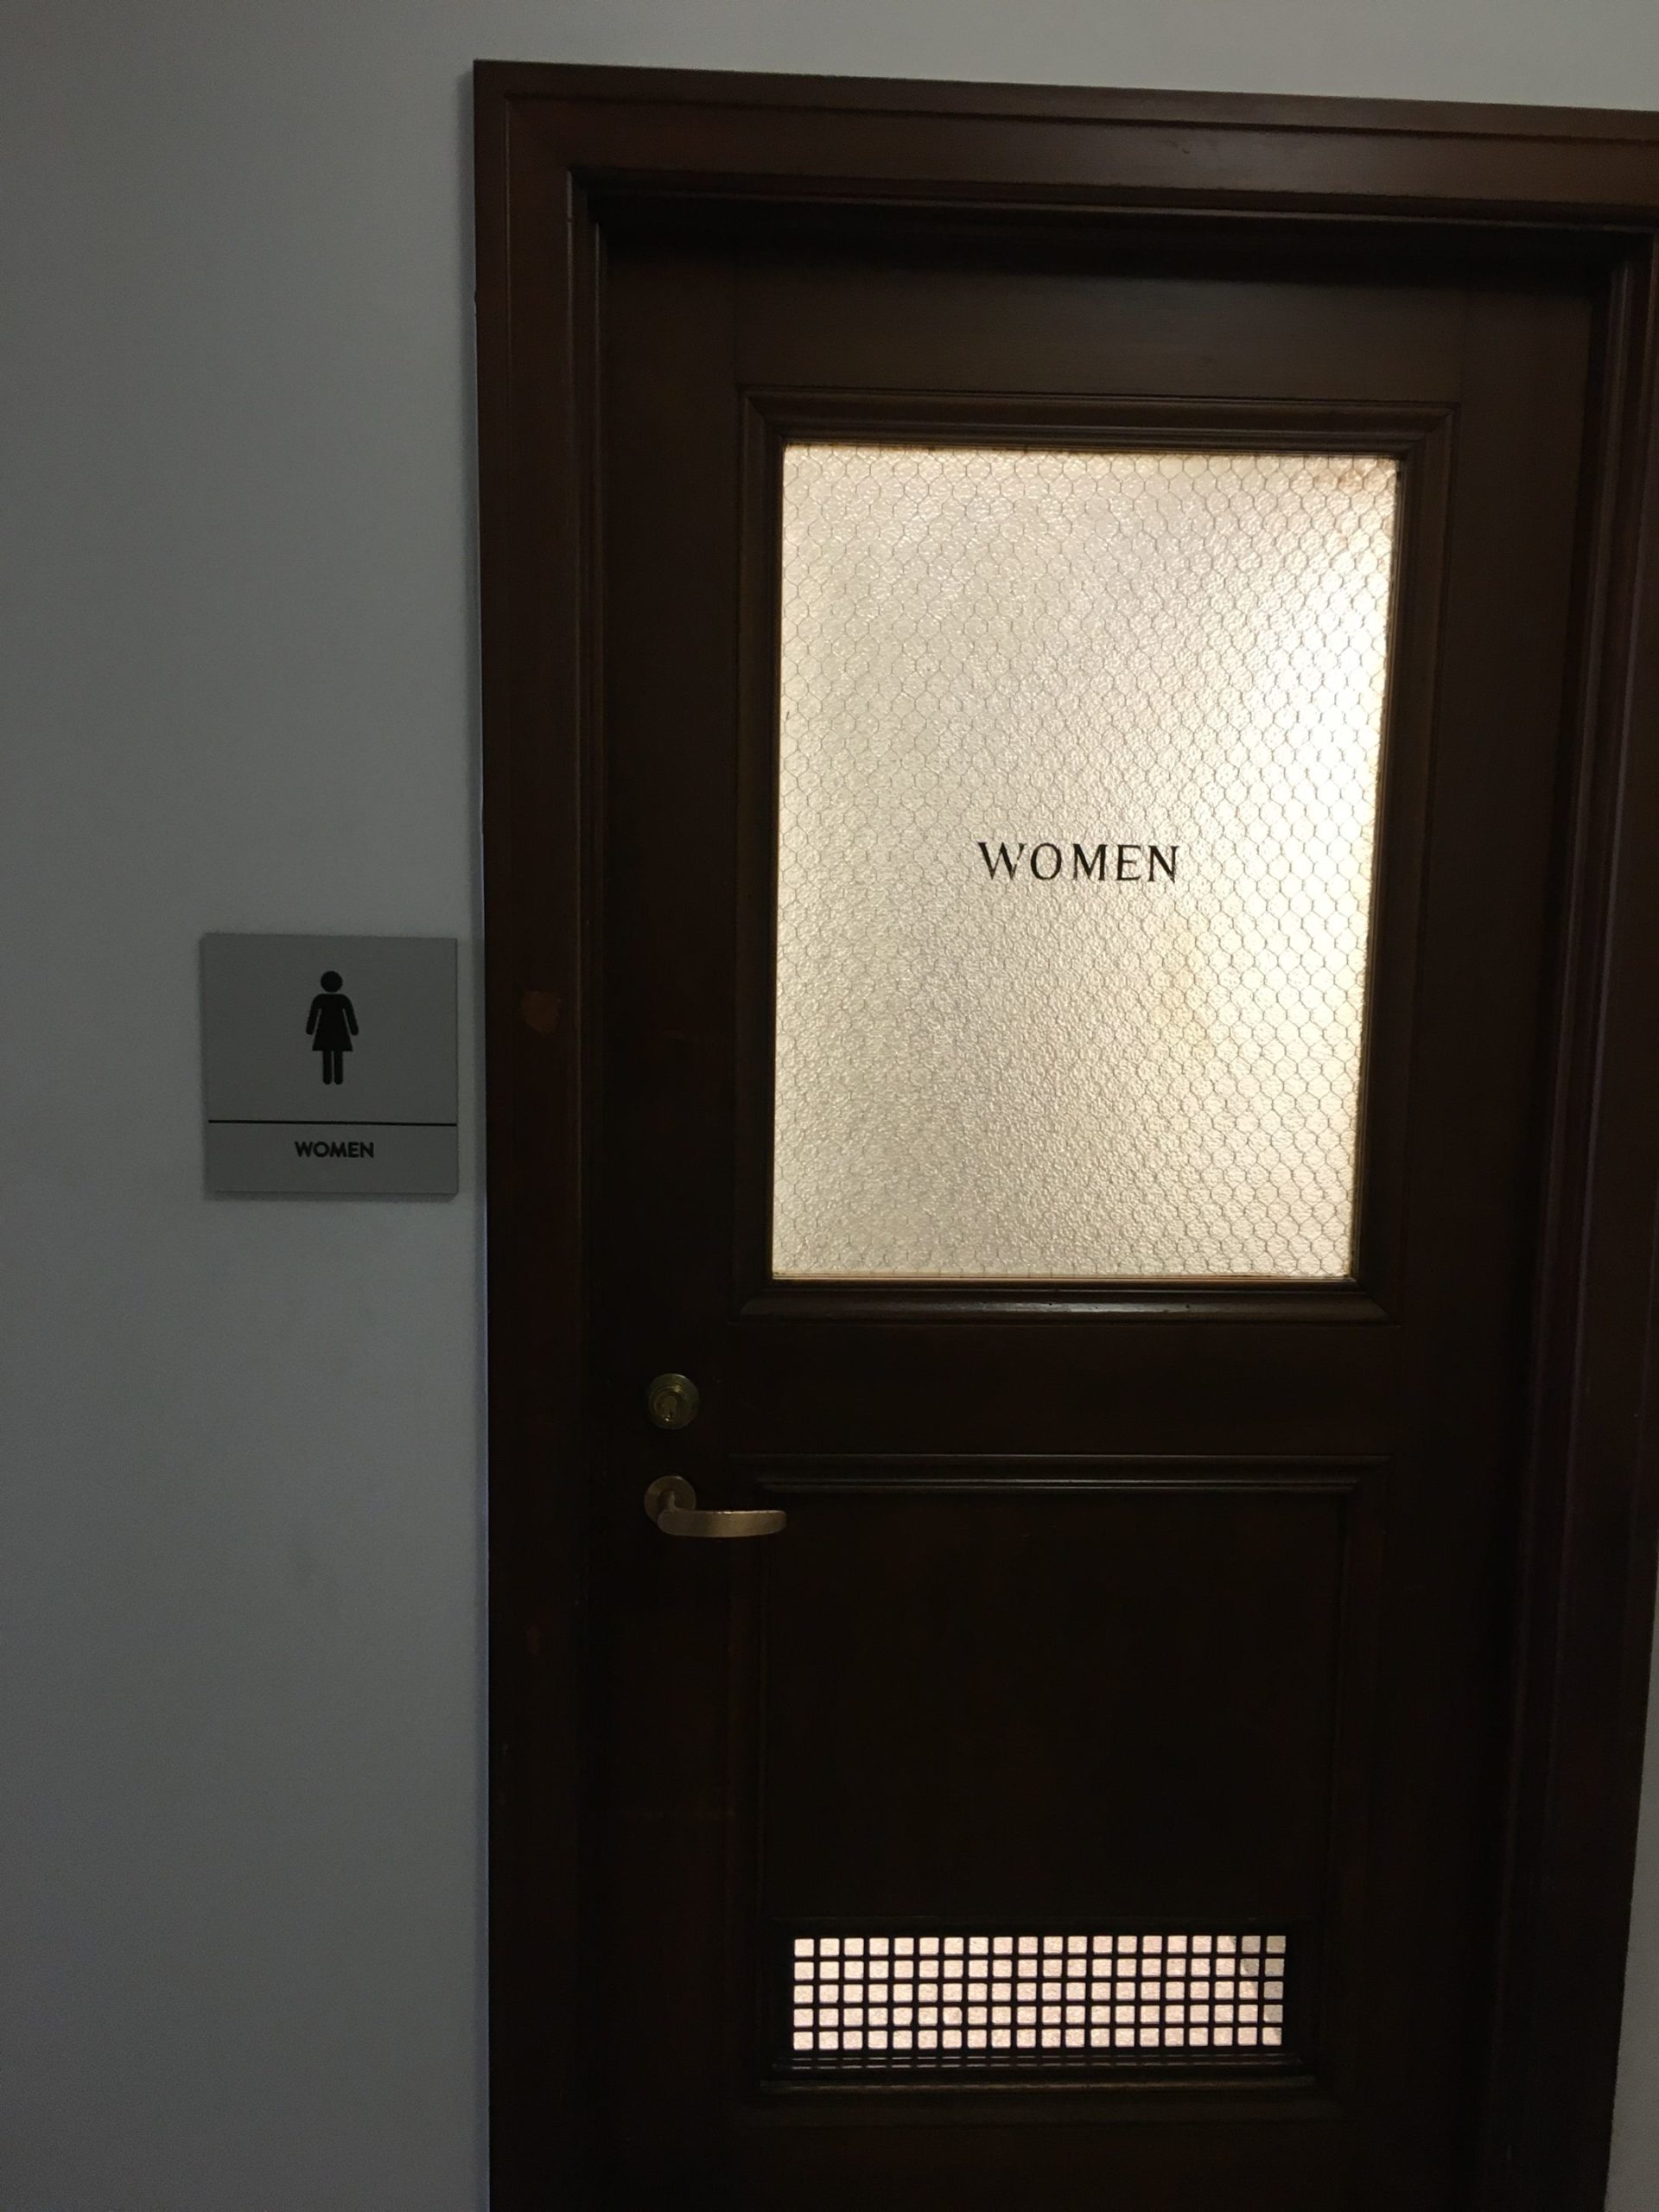 Bedrock first nation ada signs_ womens women restroom bathroom